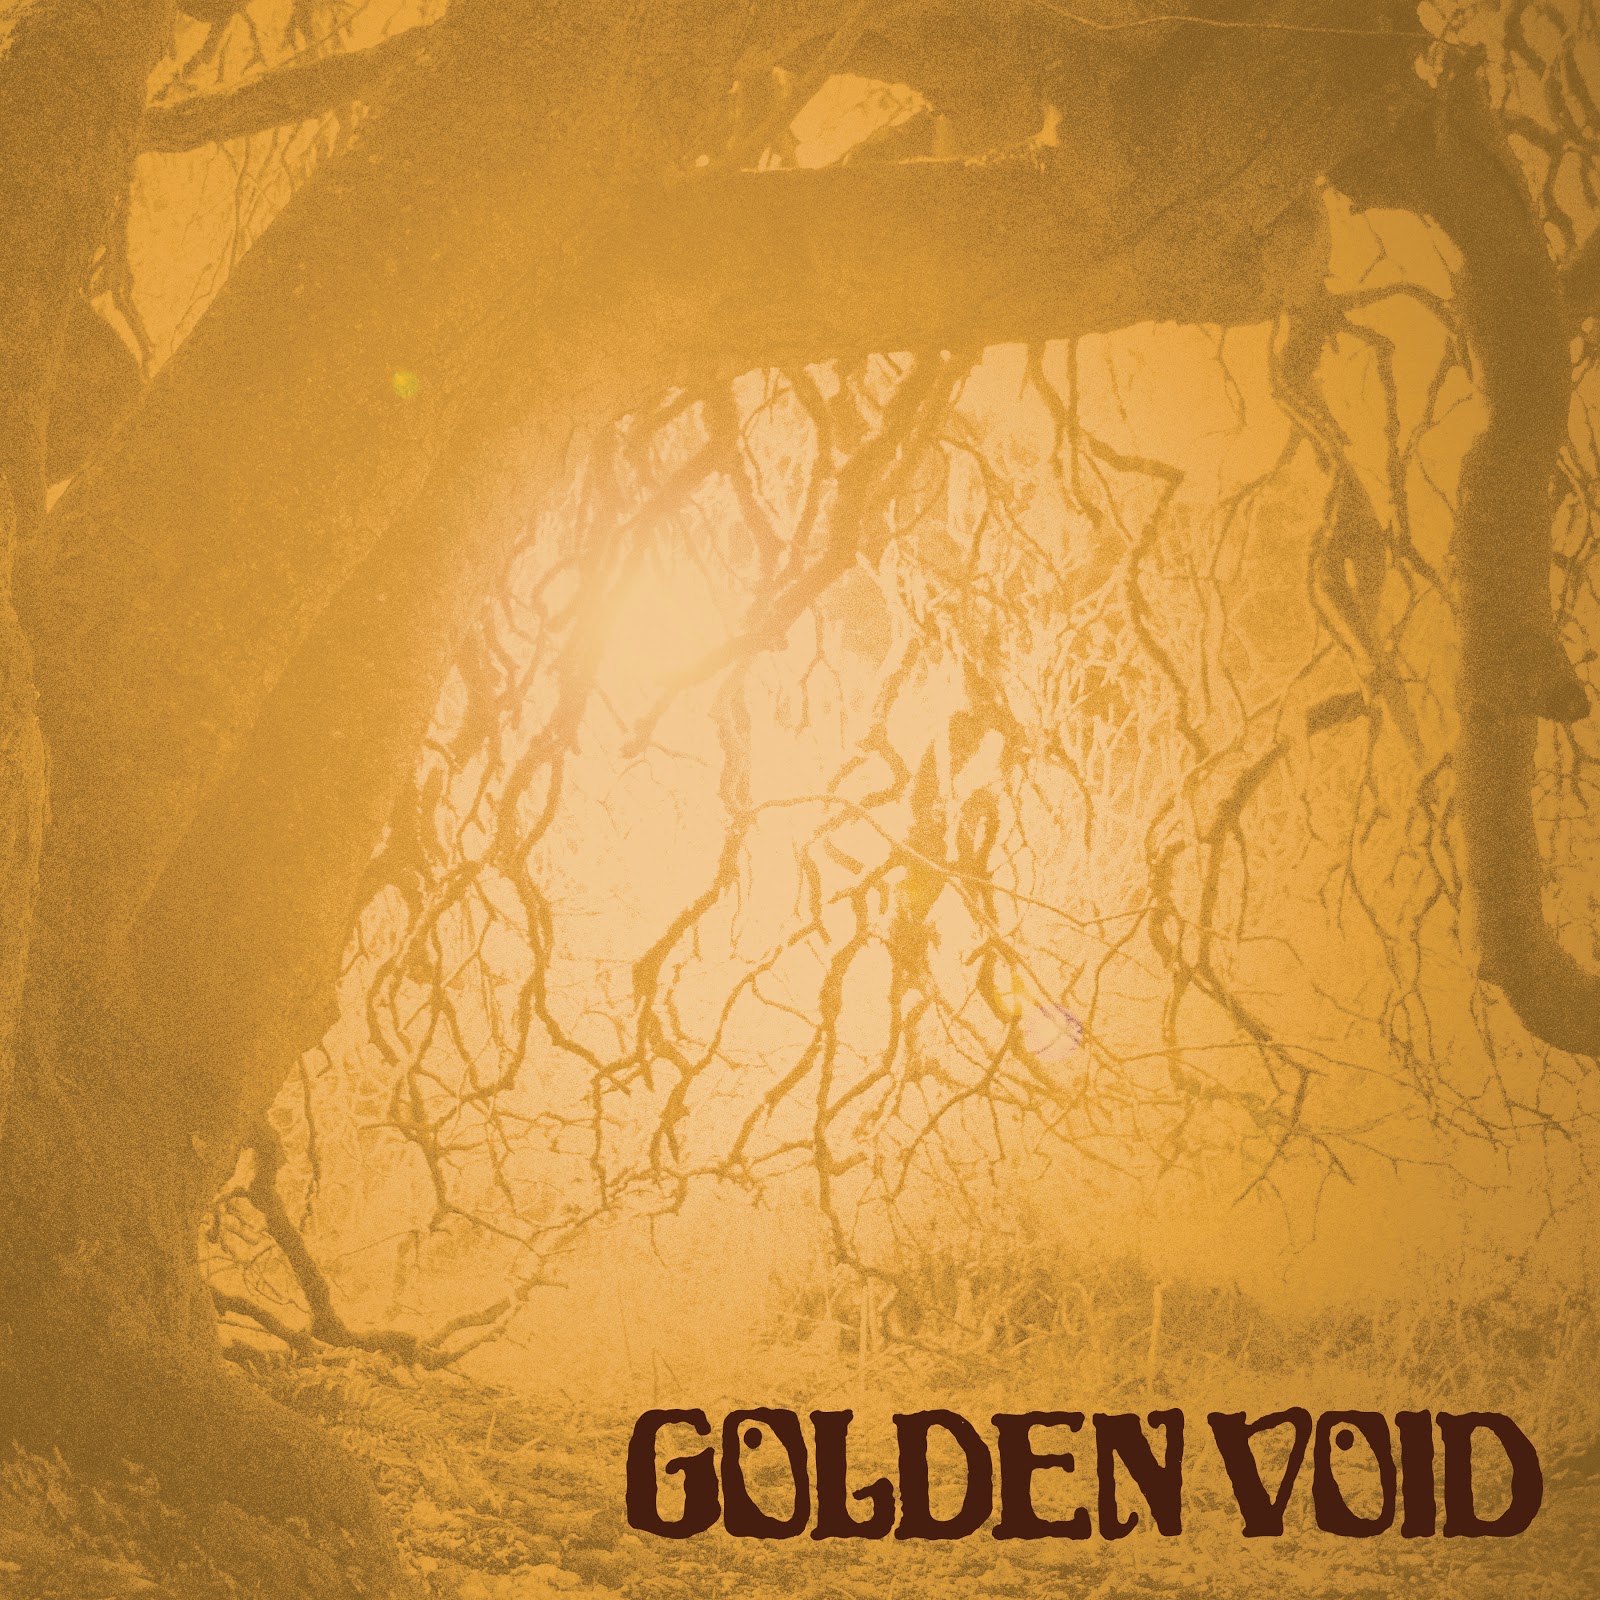 ¿Qué estáis escuchando ahora? - Página 10 Golden-void-self-titled-album-cover